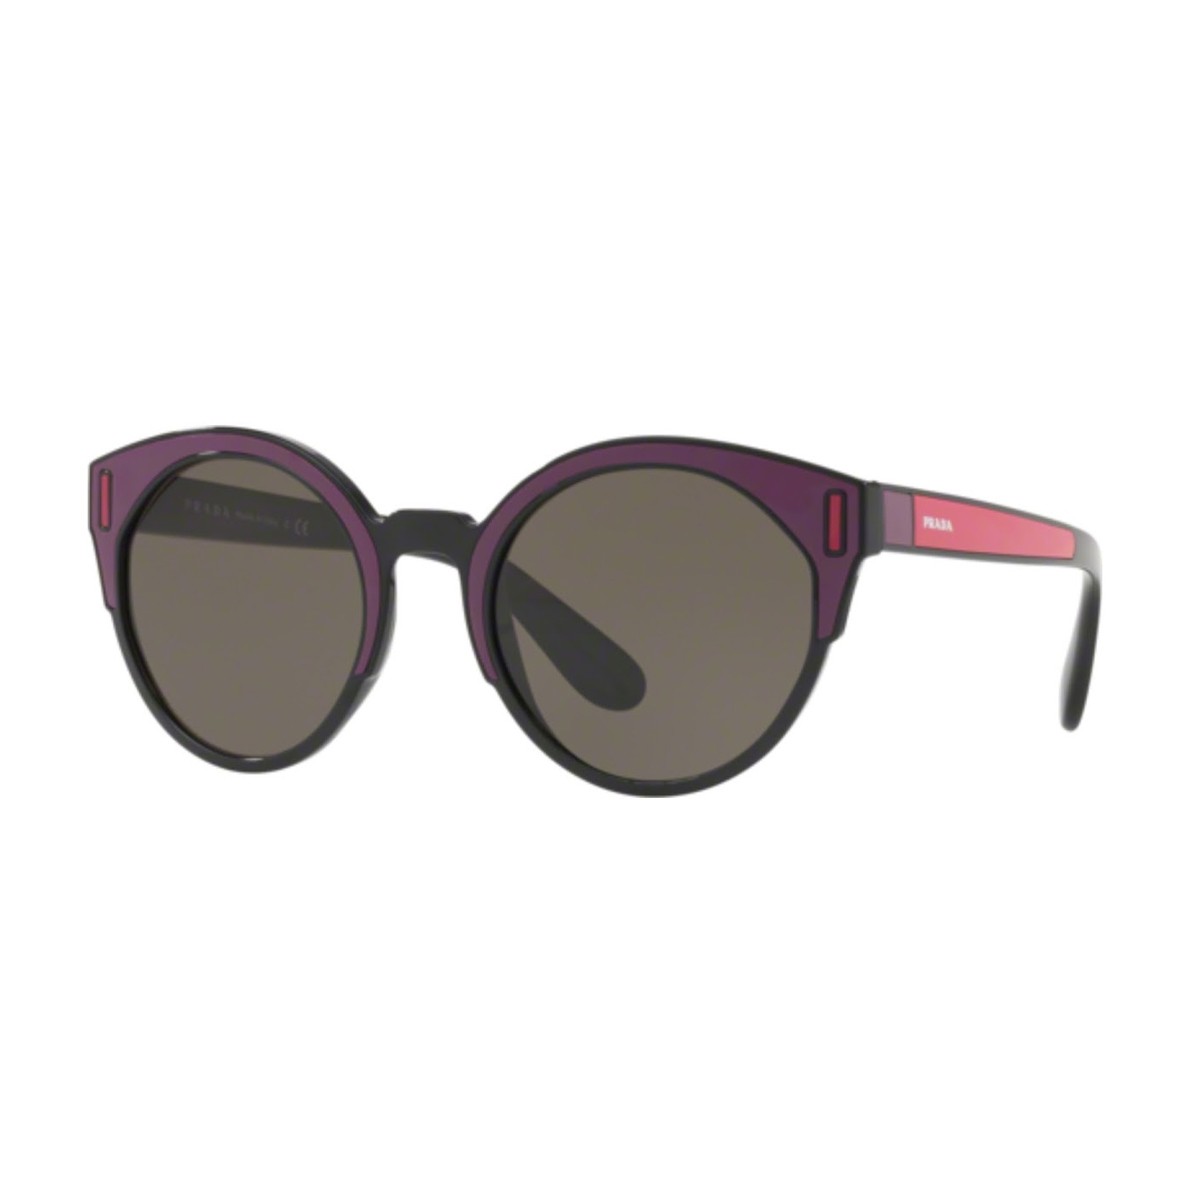 Prada PR 03US | Women's sunglasses